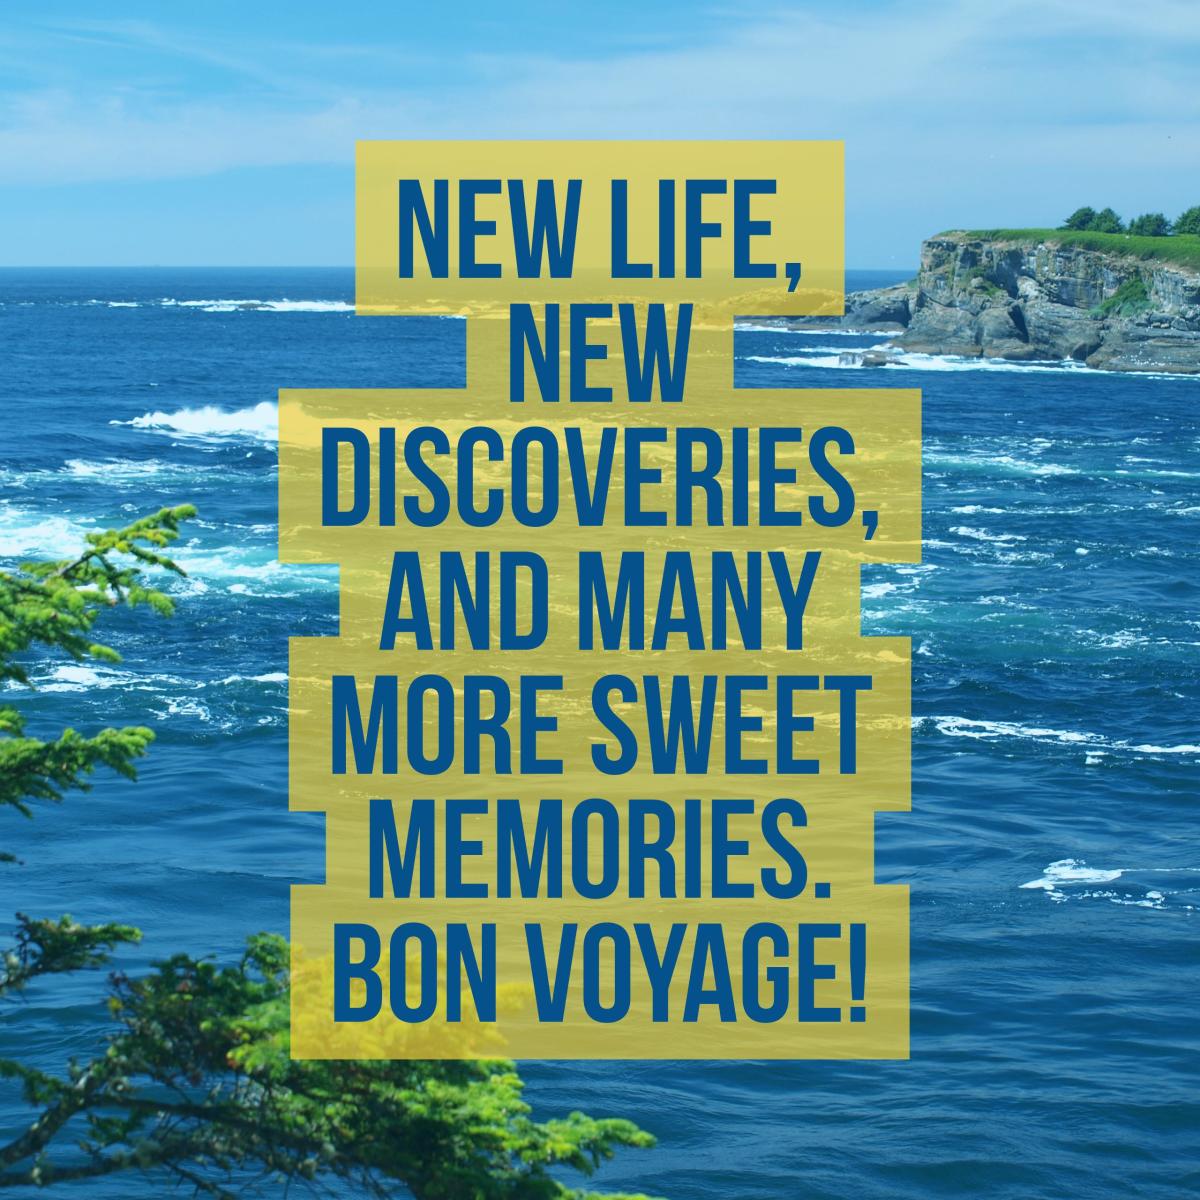 bon-voyage-messages-have-a-safe-trip-wishes